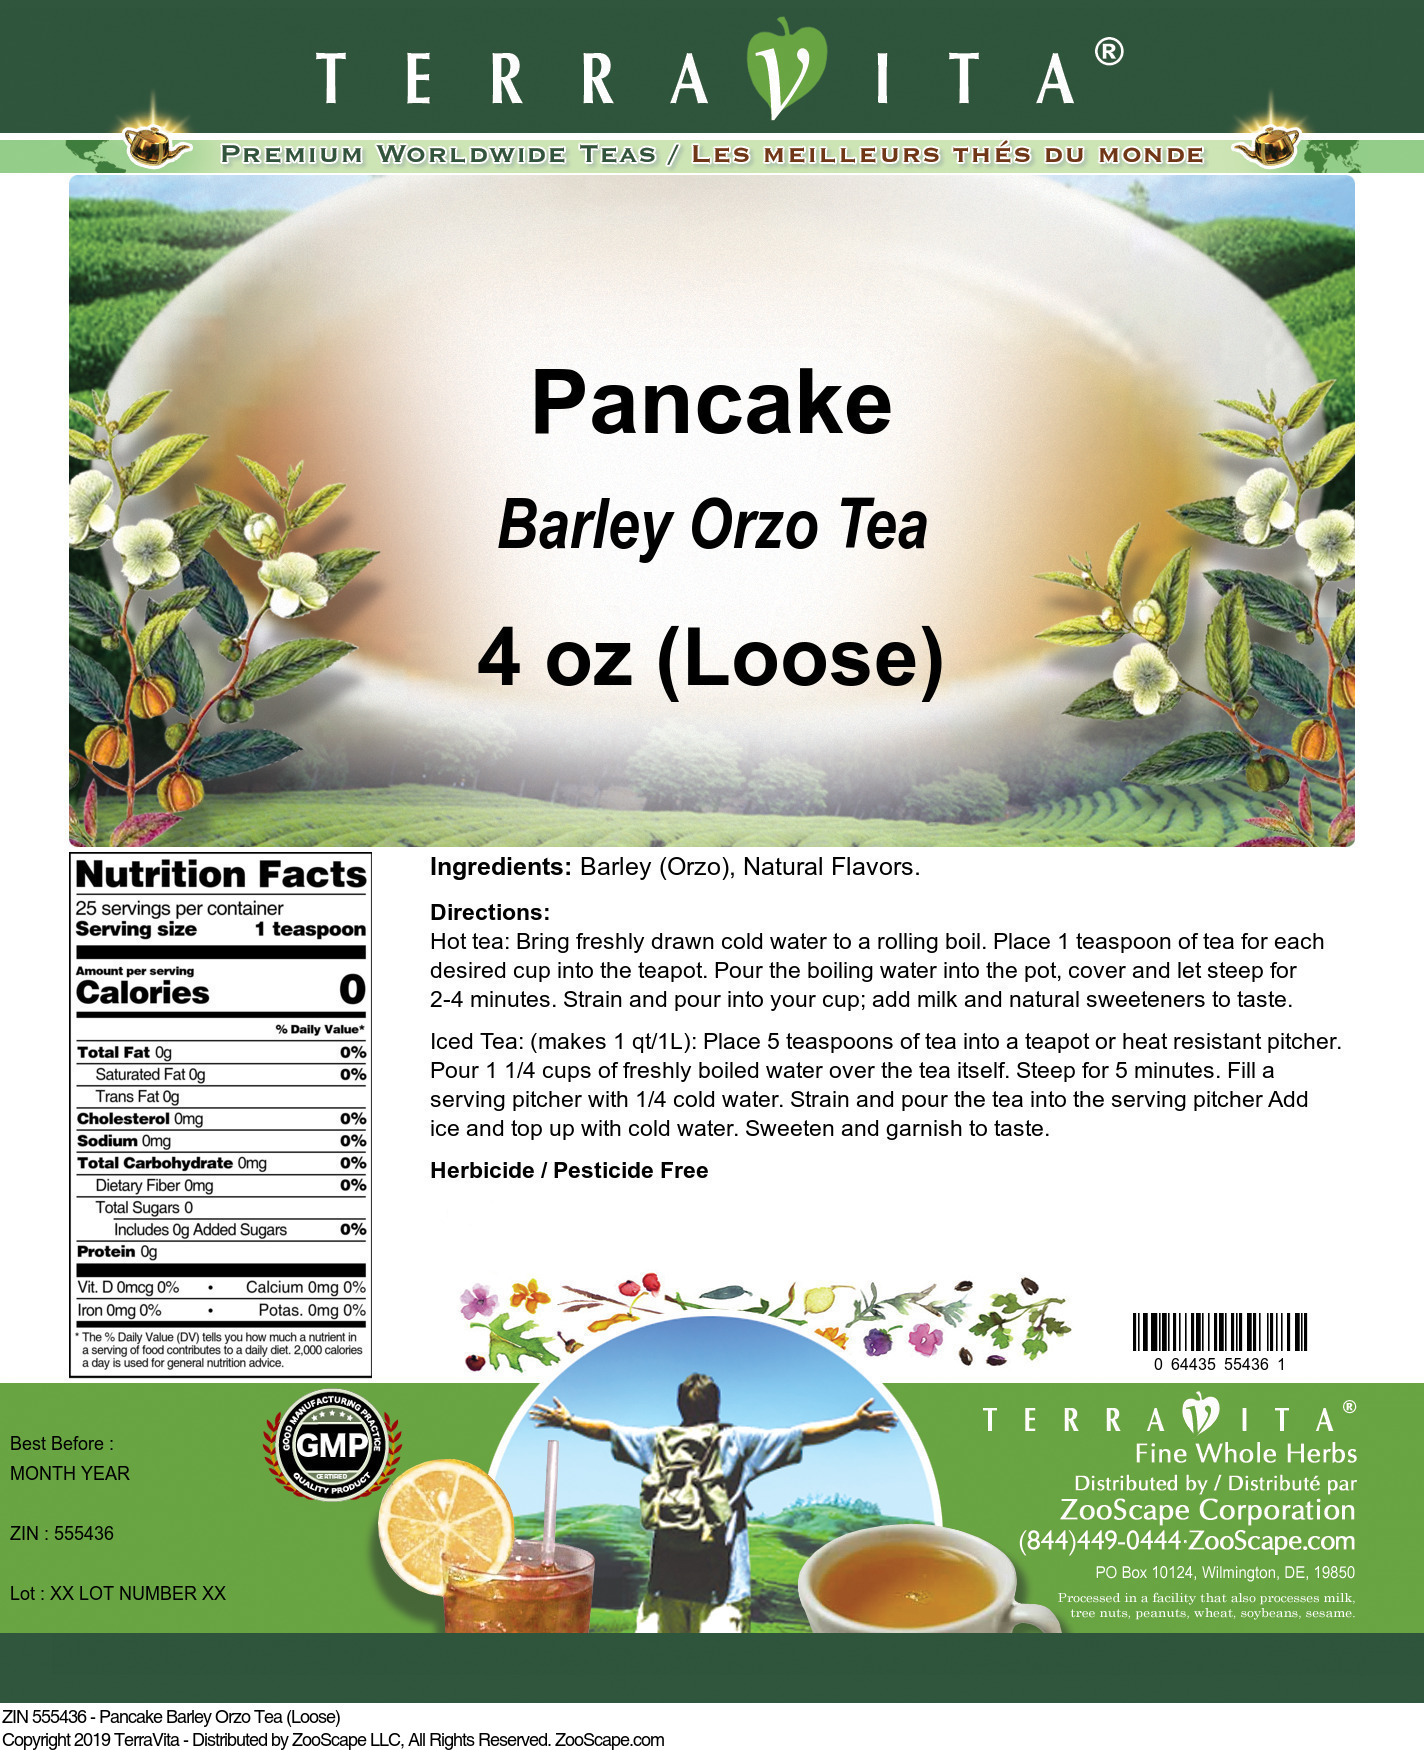 Pancake Barley Orzo Tea (Loose) - Label